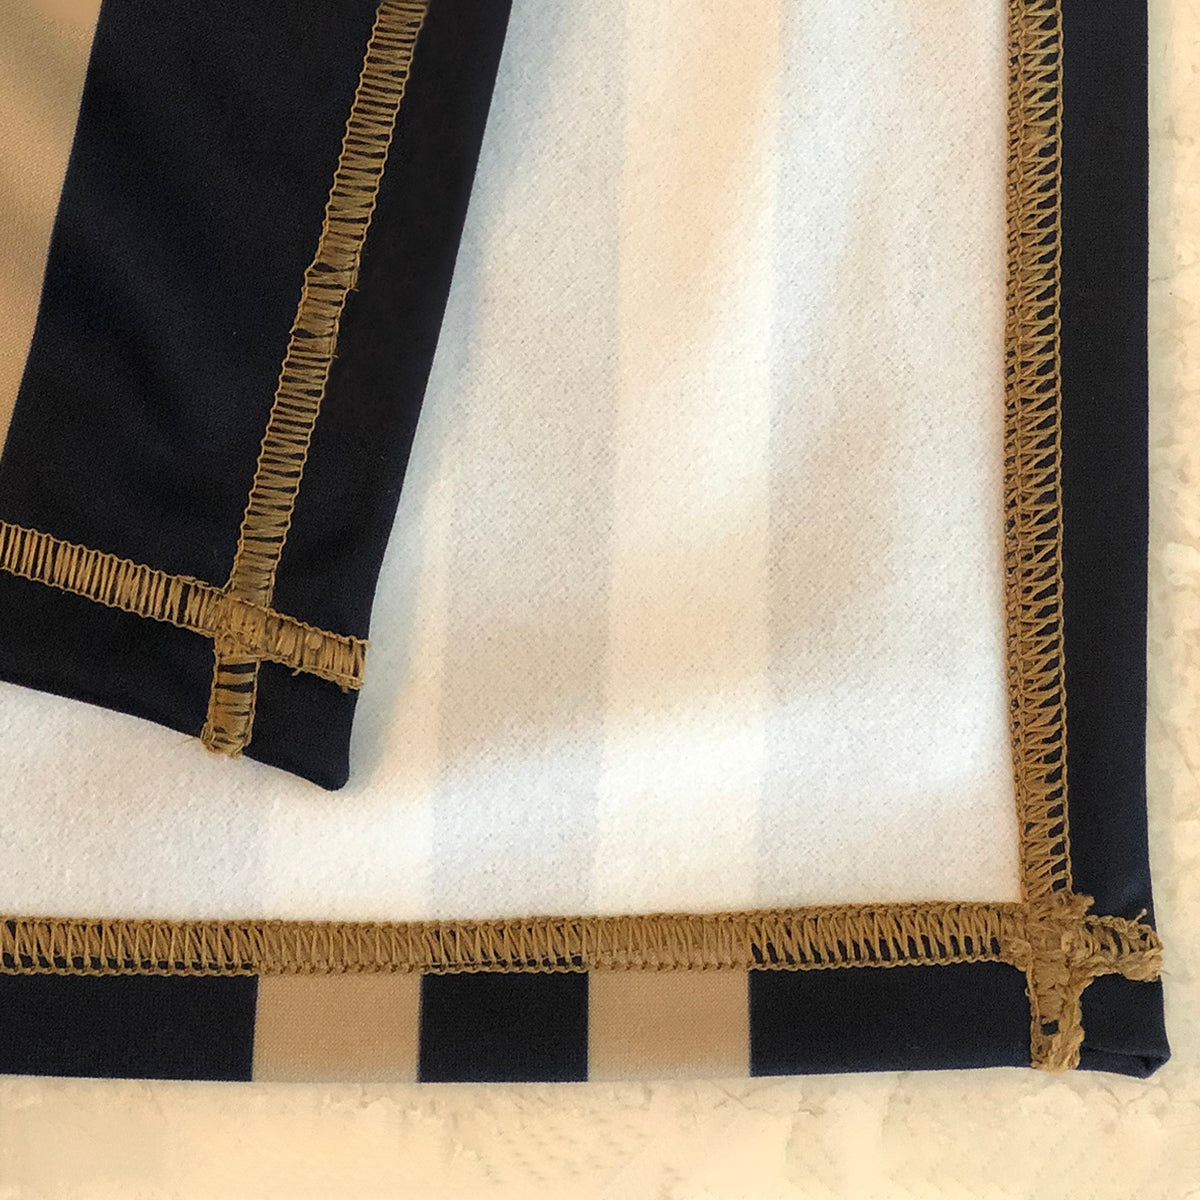 UA Little Rock Tojans UALR Game Day Soft Premium Fleece Maroon Throw Blanket 40 x 58 Logo and Stripes